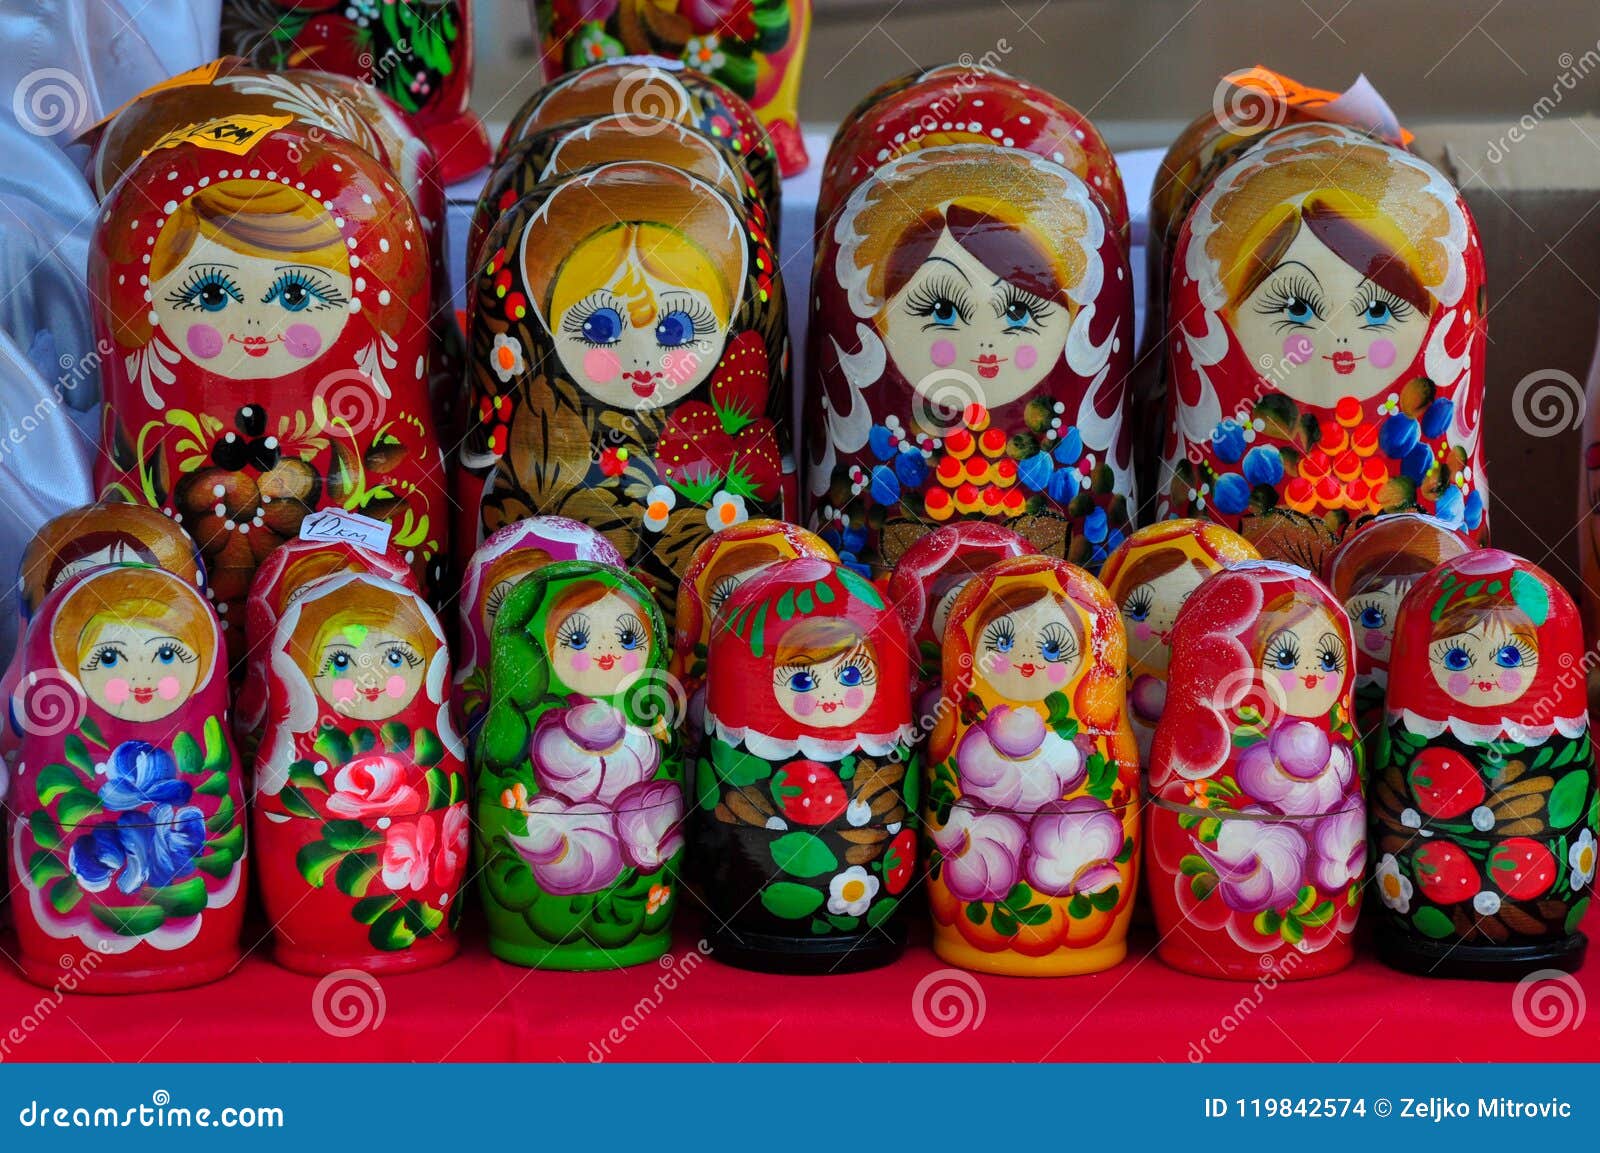 wooden matryoshka dolls